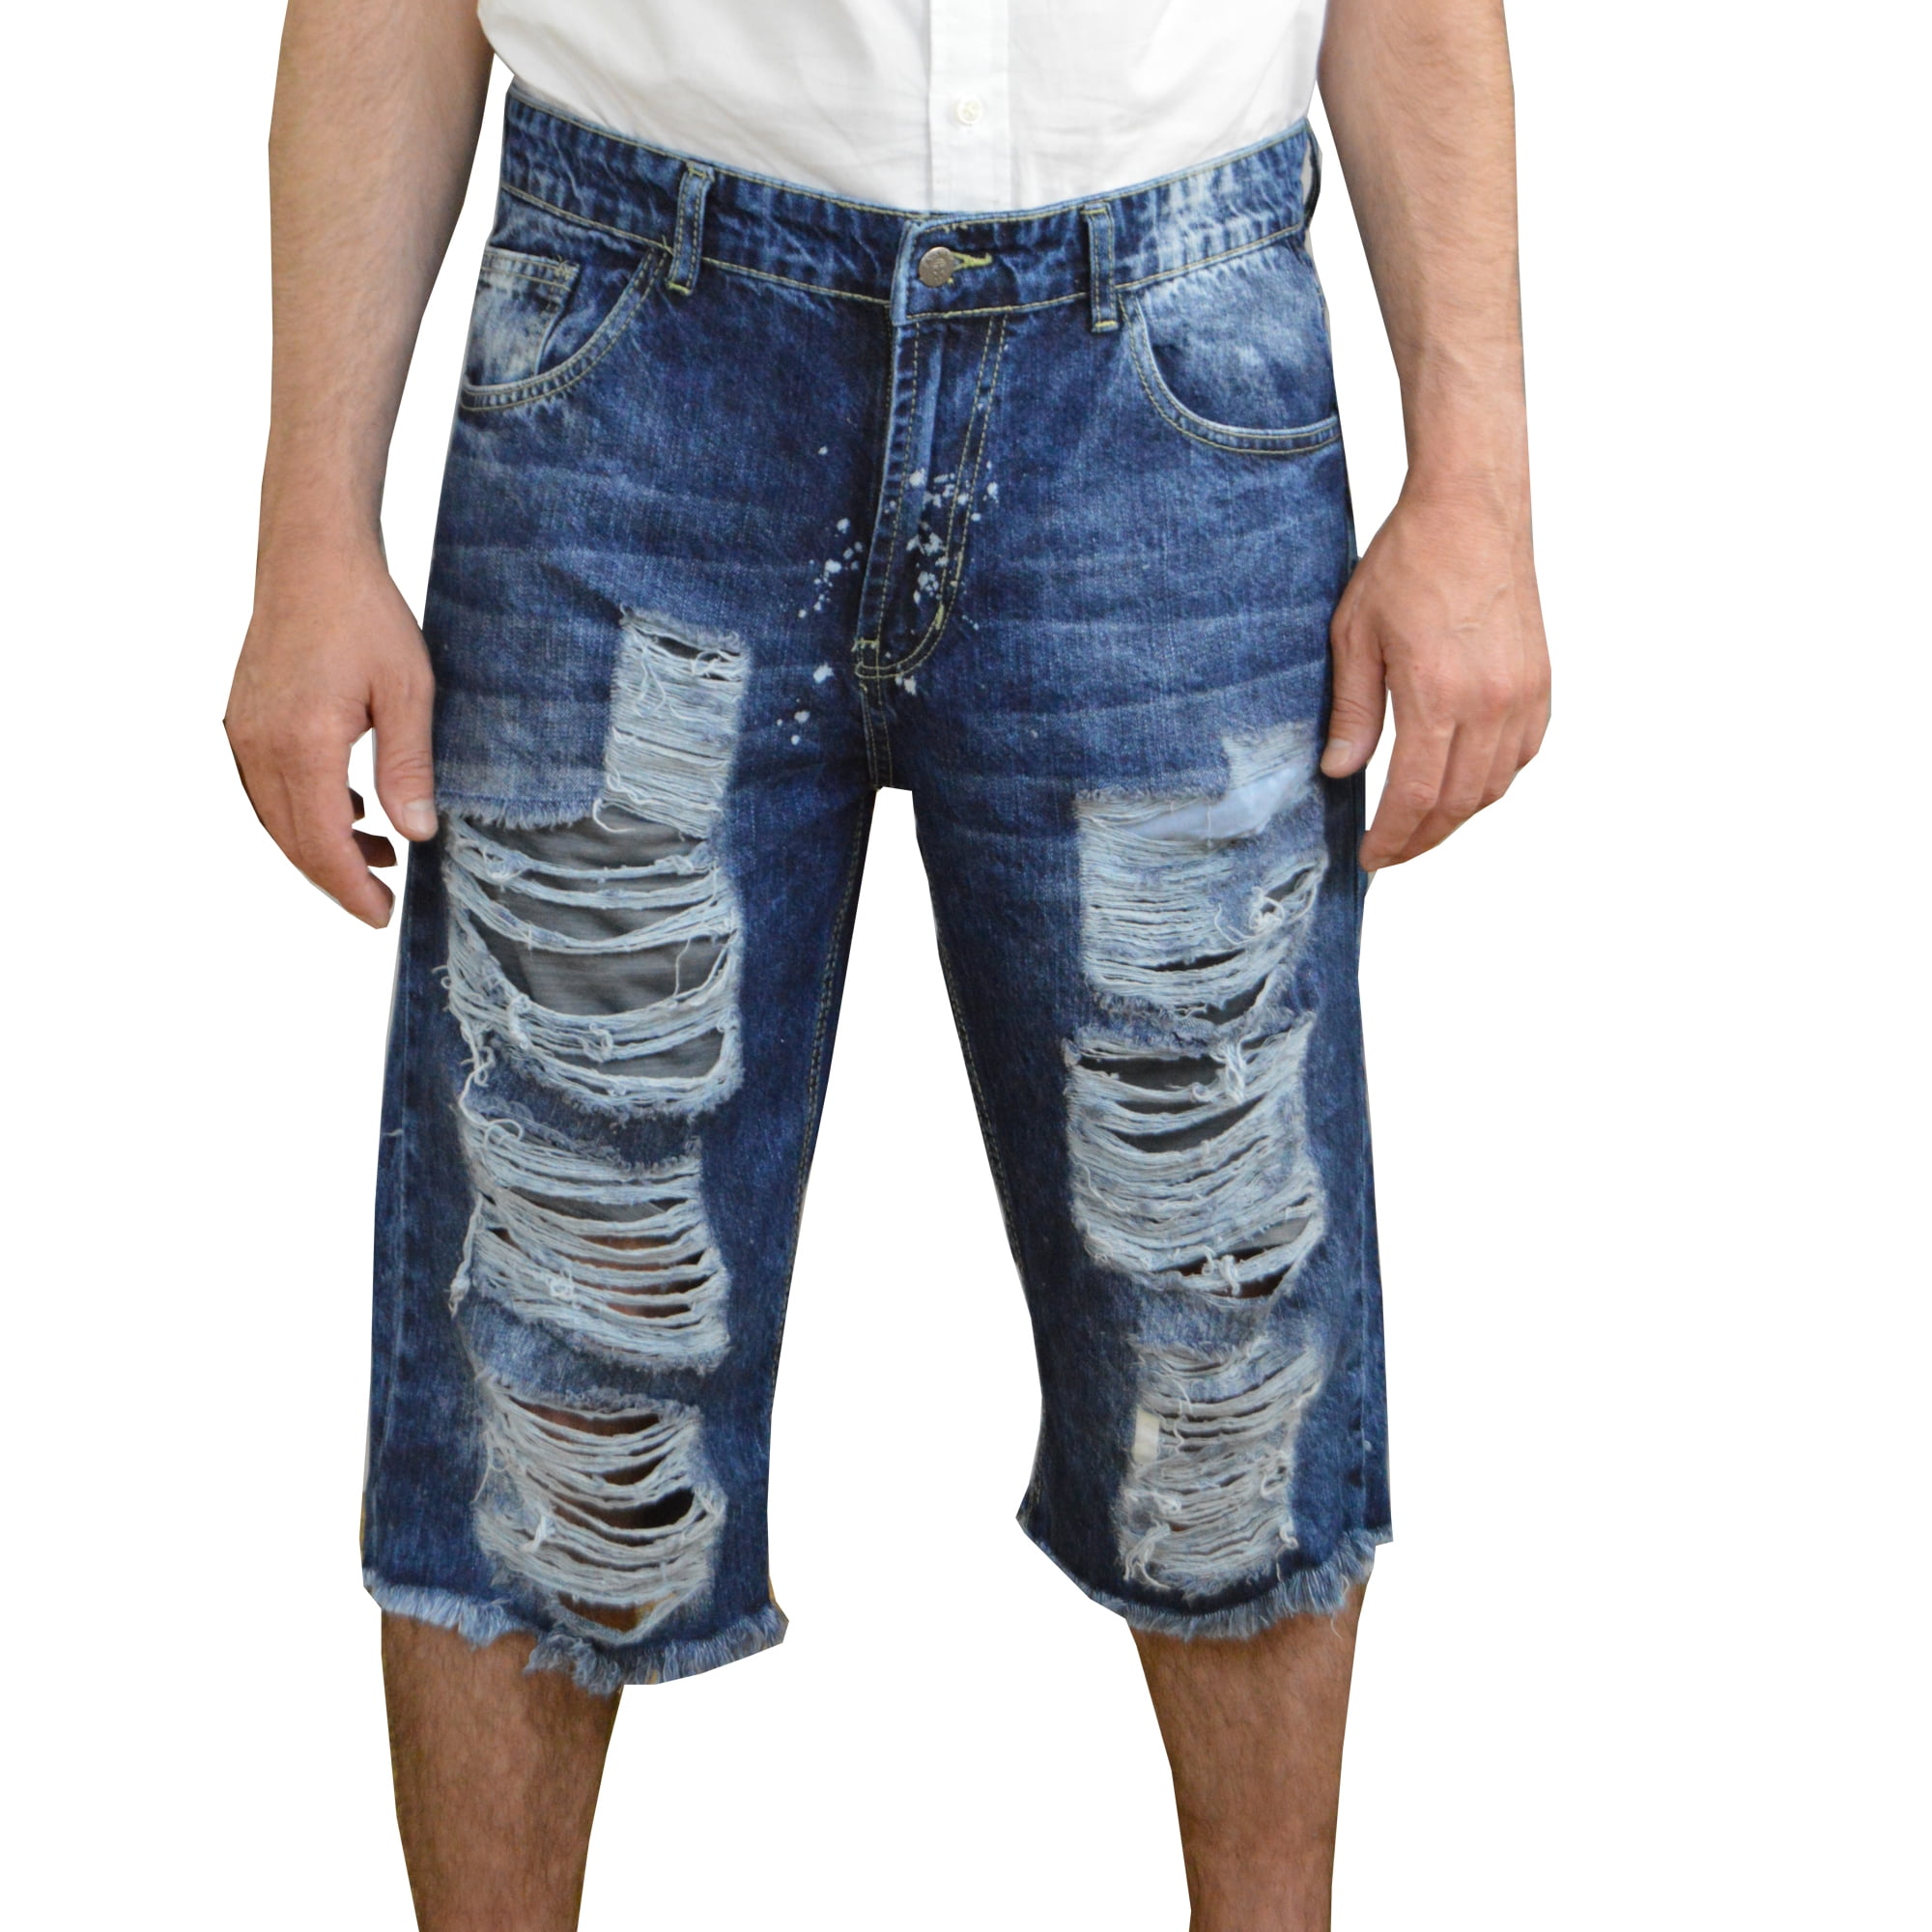 BYWX Men Floral Print Trendy Regular Fit Summer Casual Ripped Destroyed Denim Shorts Jeans 